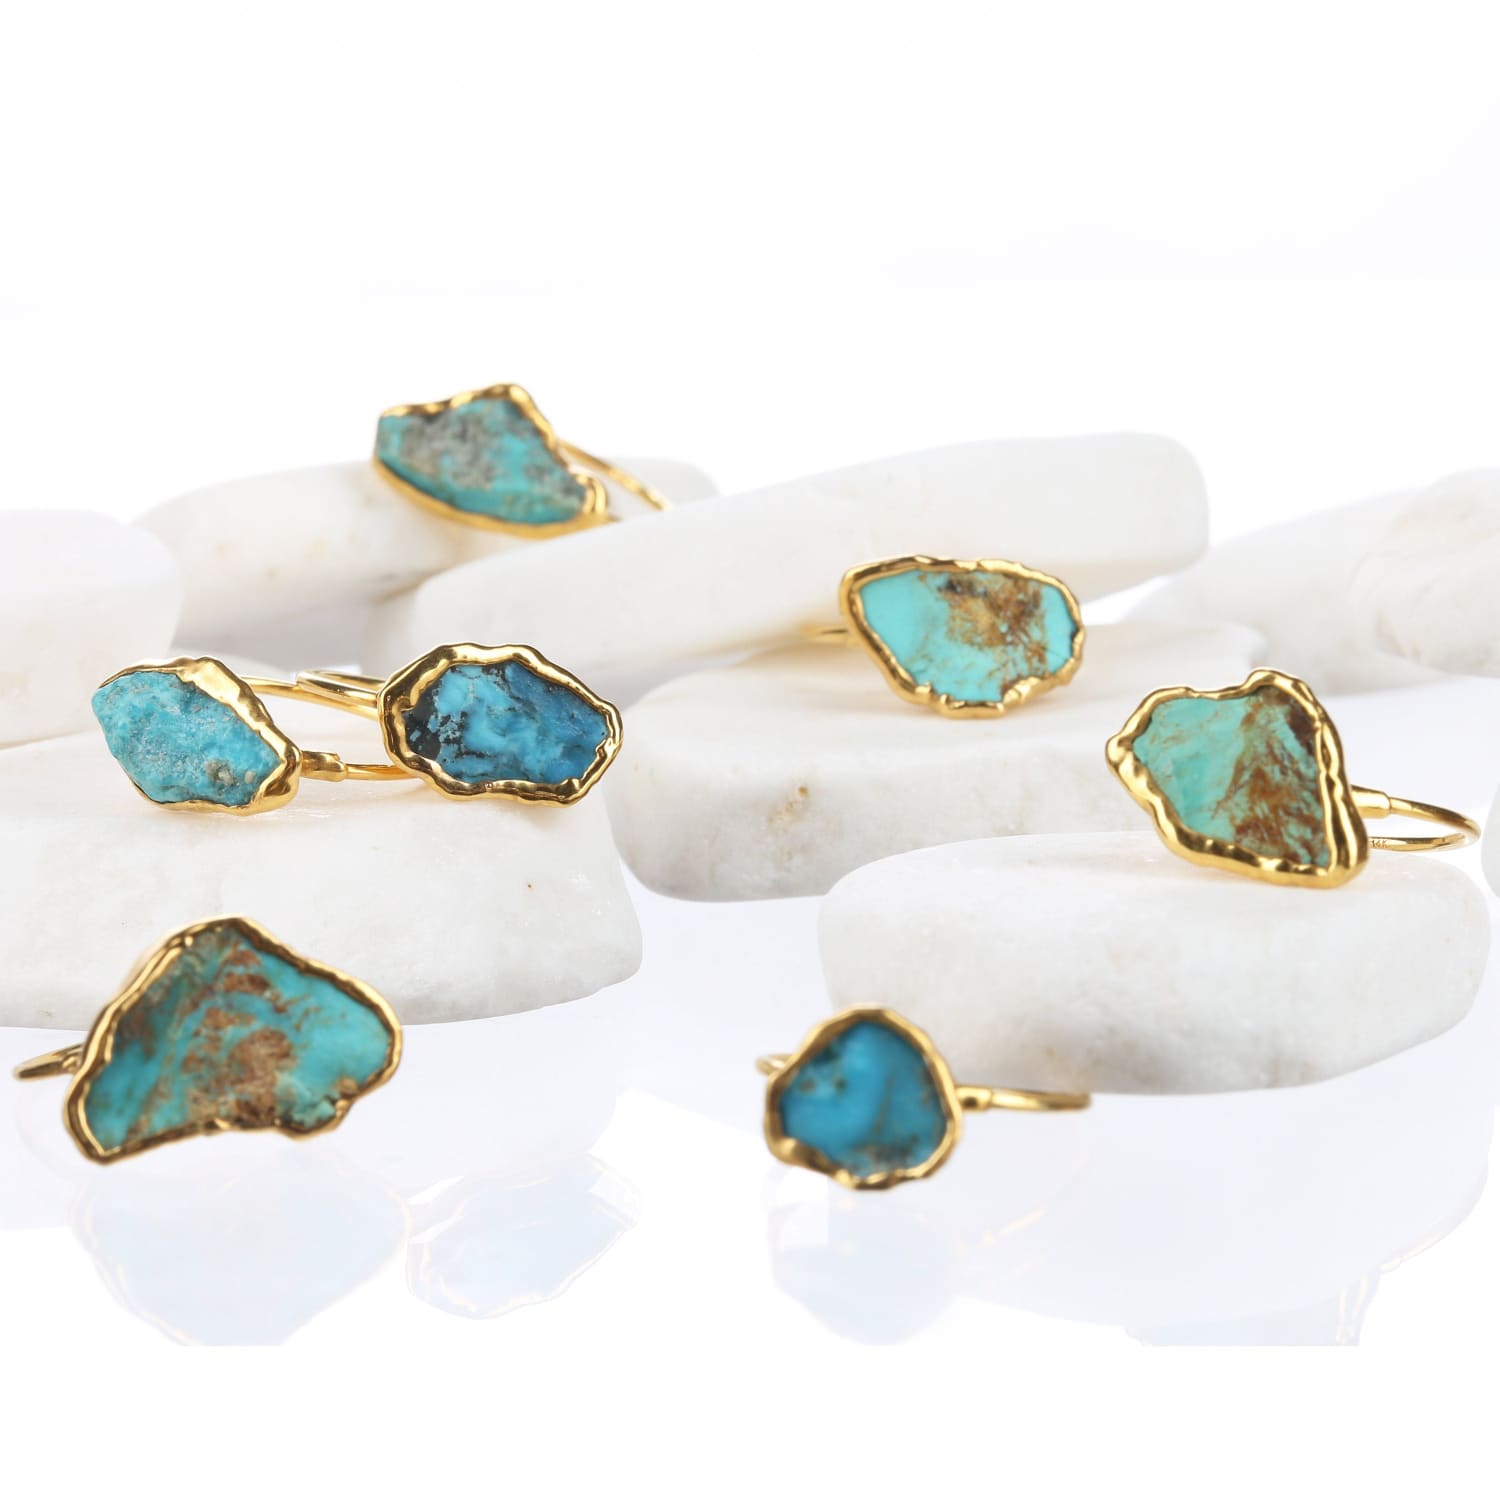 Large Raw Turquoise Ring Gemstone Jewelry Rough Crystal